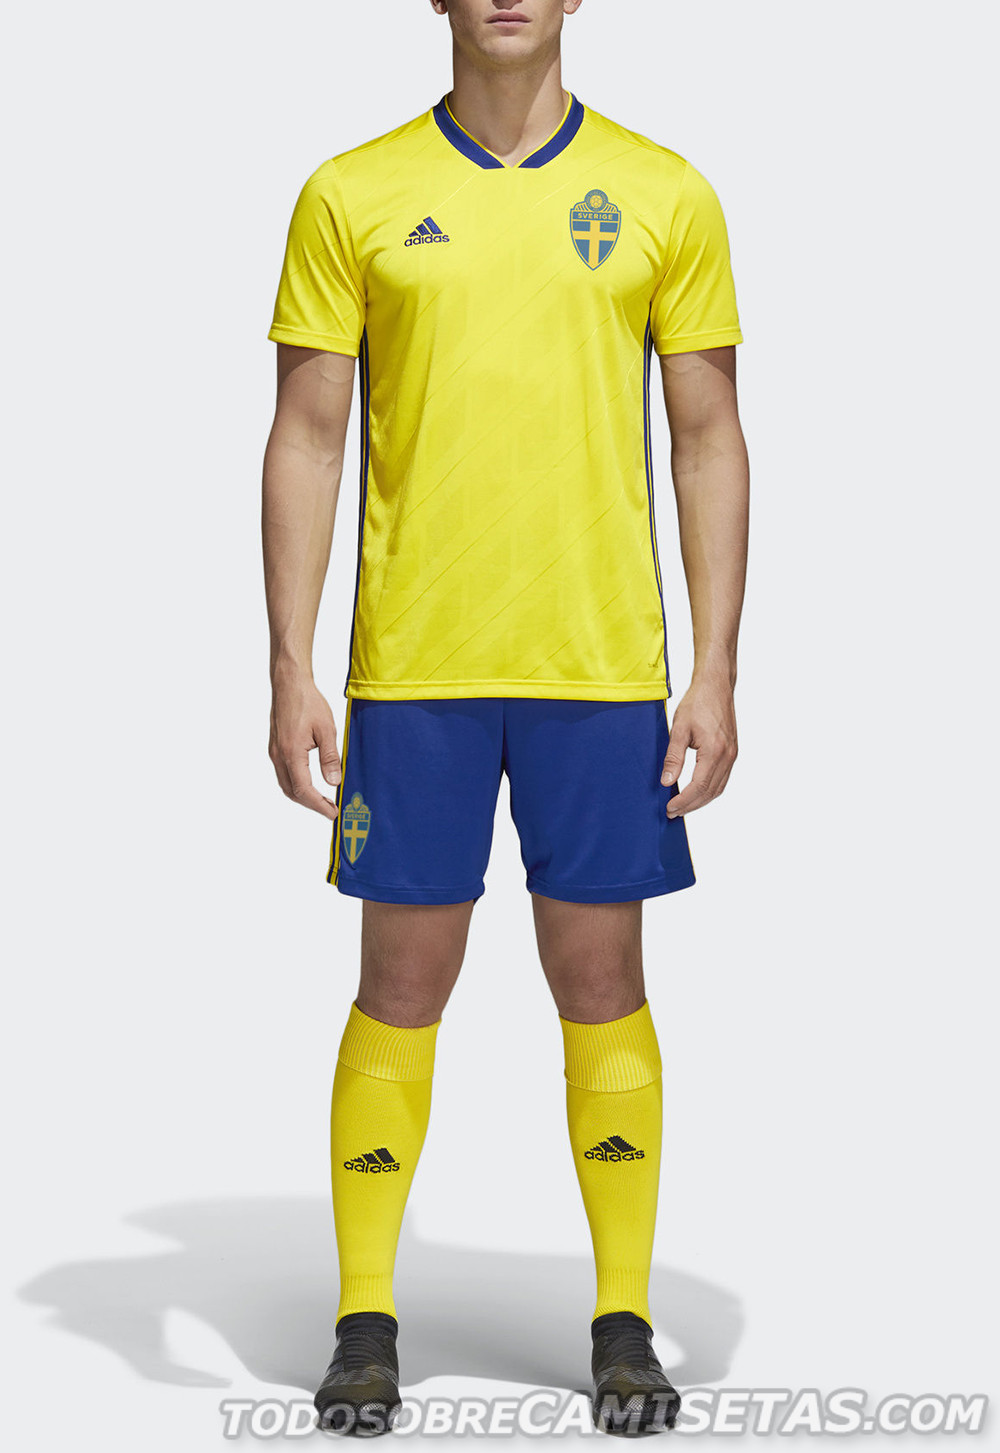 Sweden 2018 adidas home kit